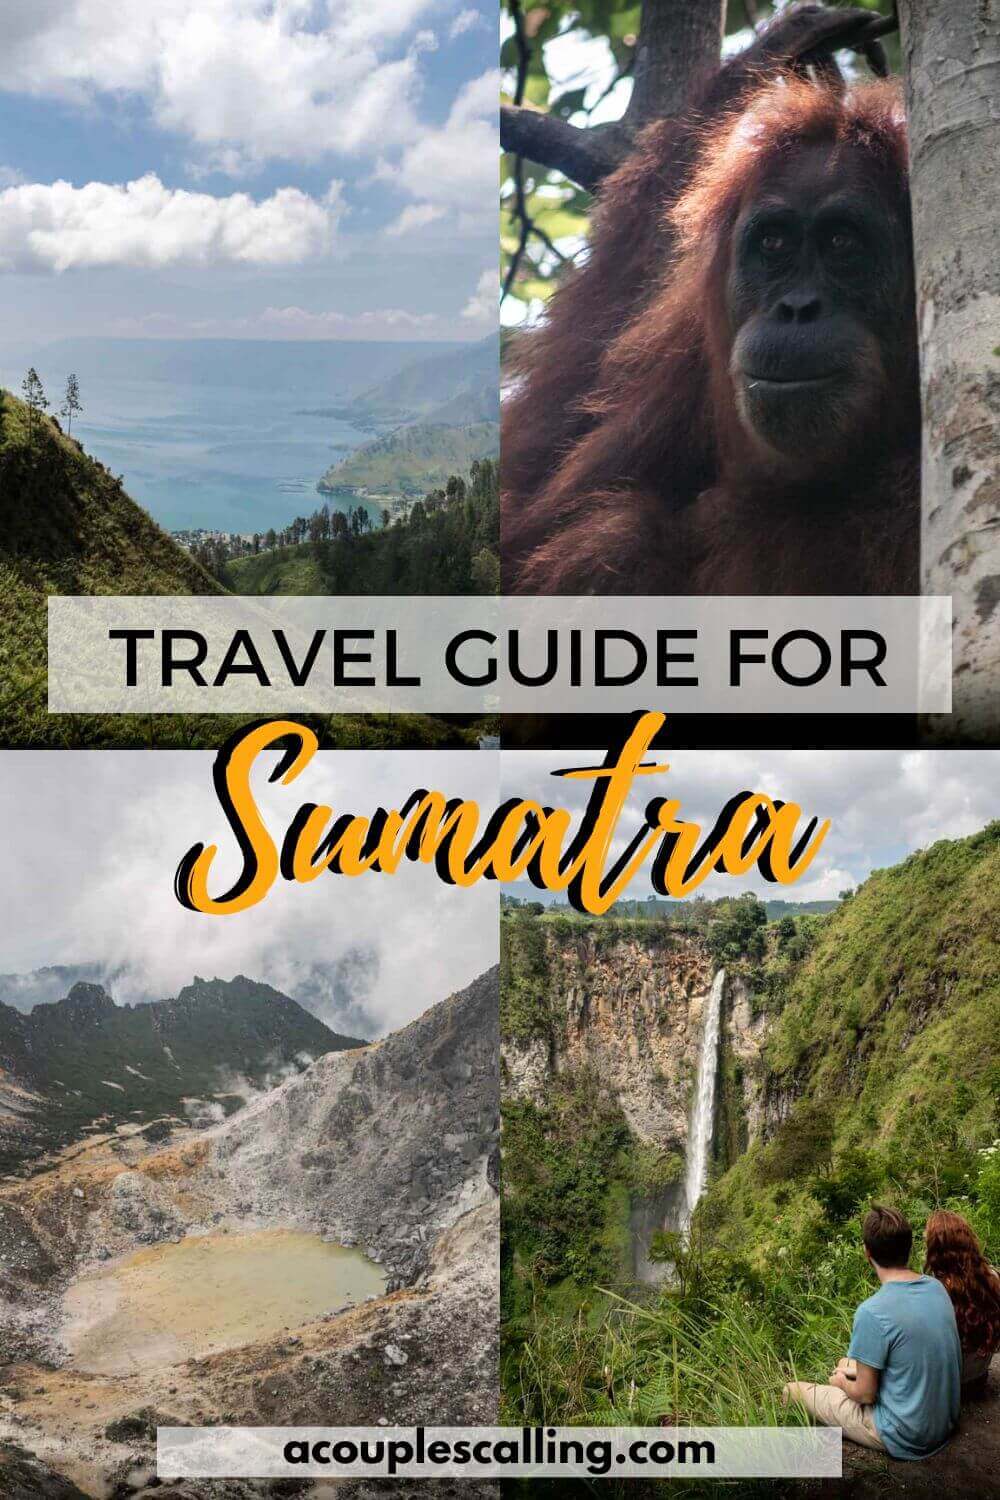 Sumatra Travel Guide